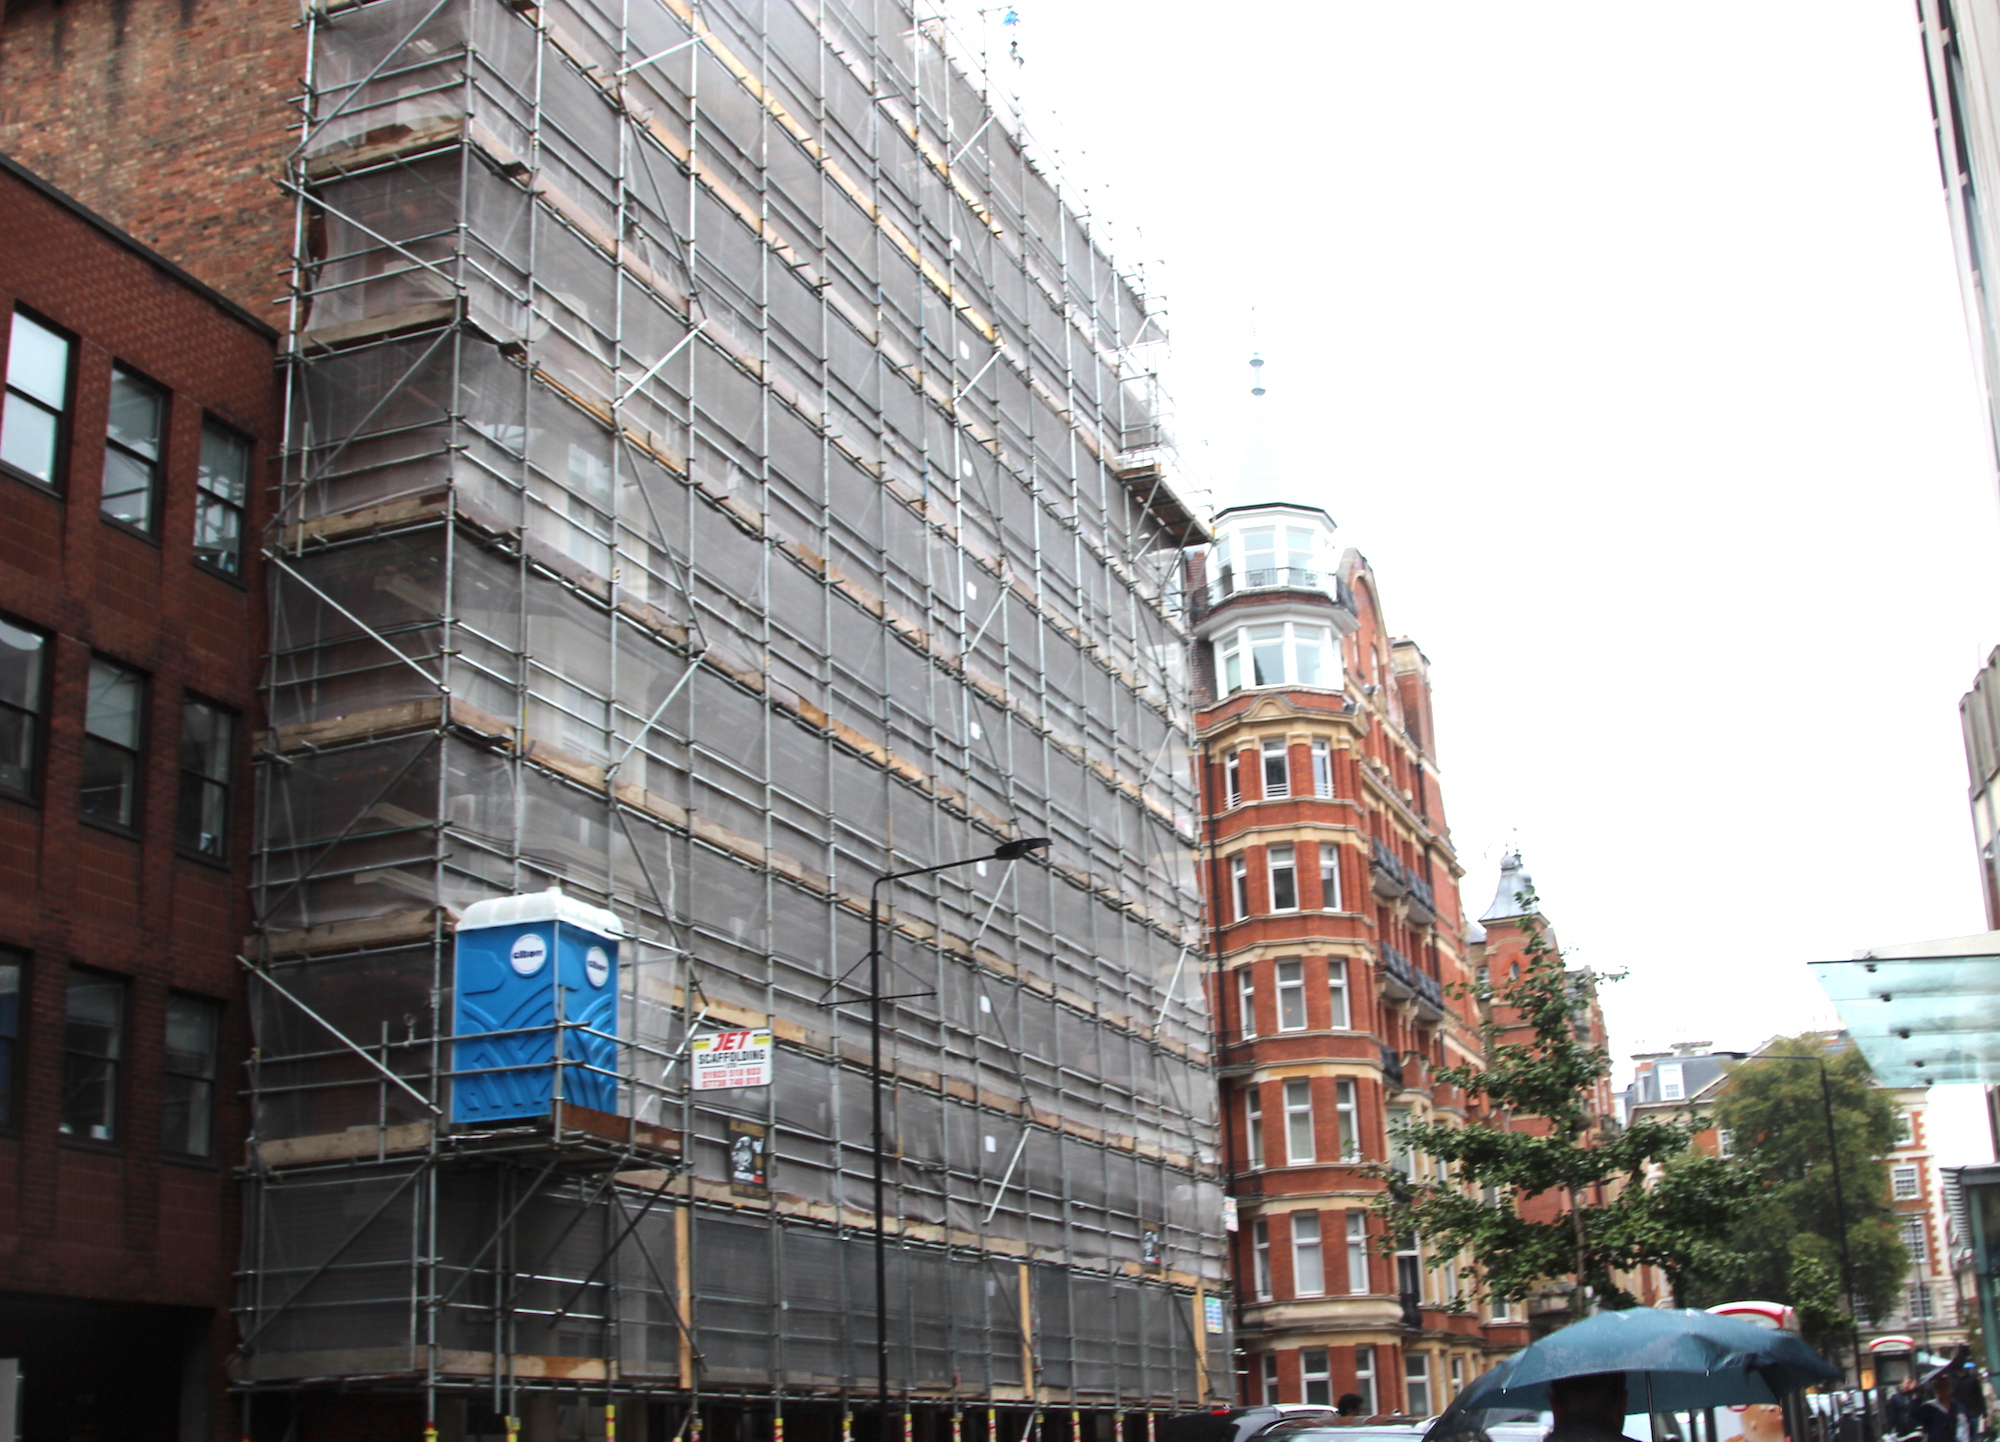 London scaffolding company